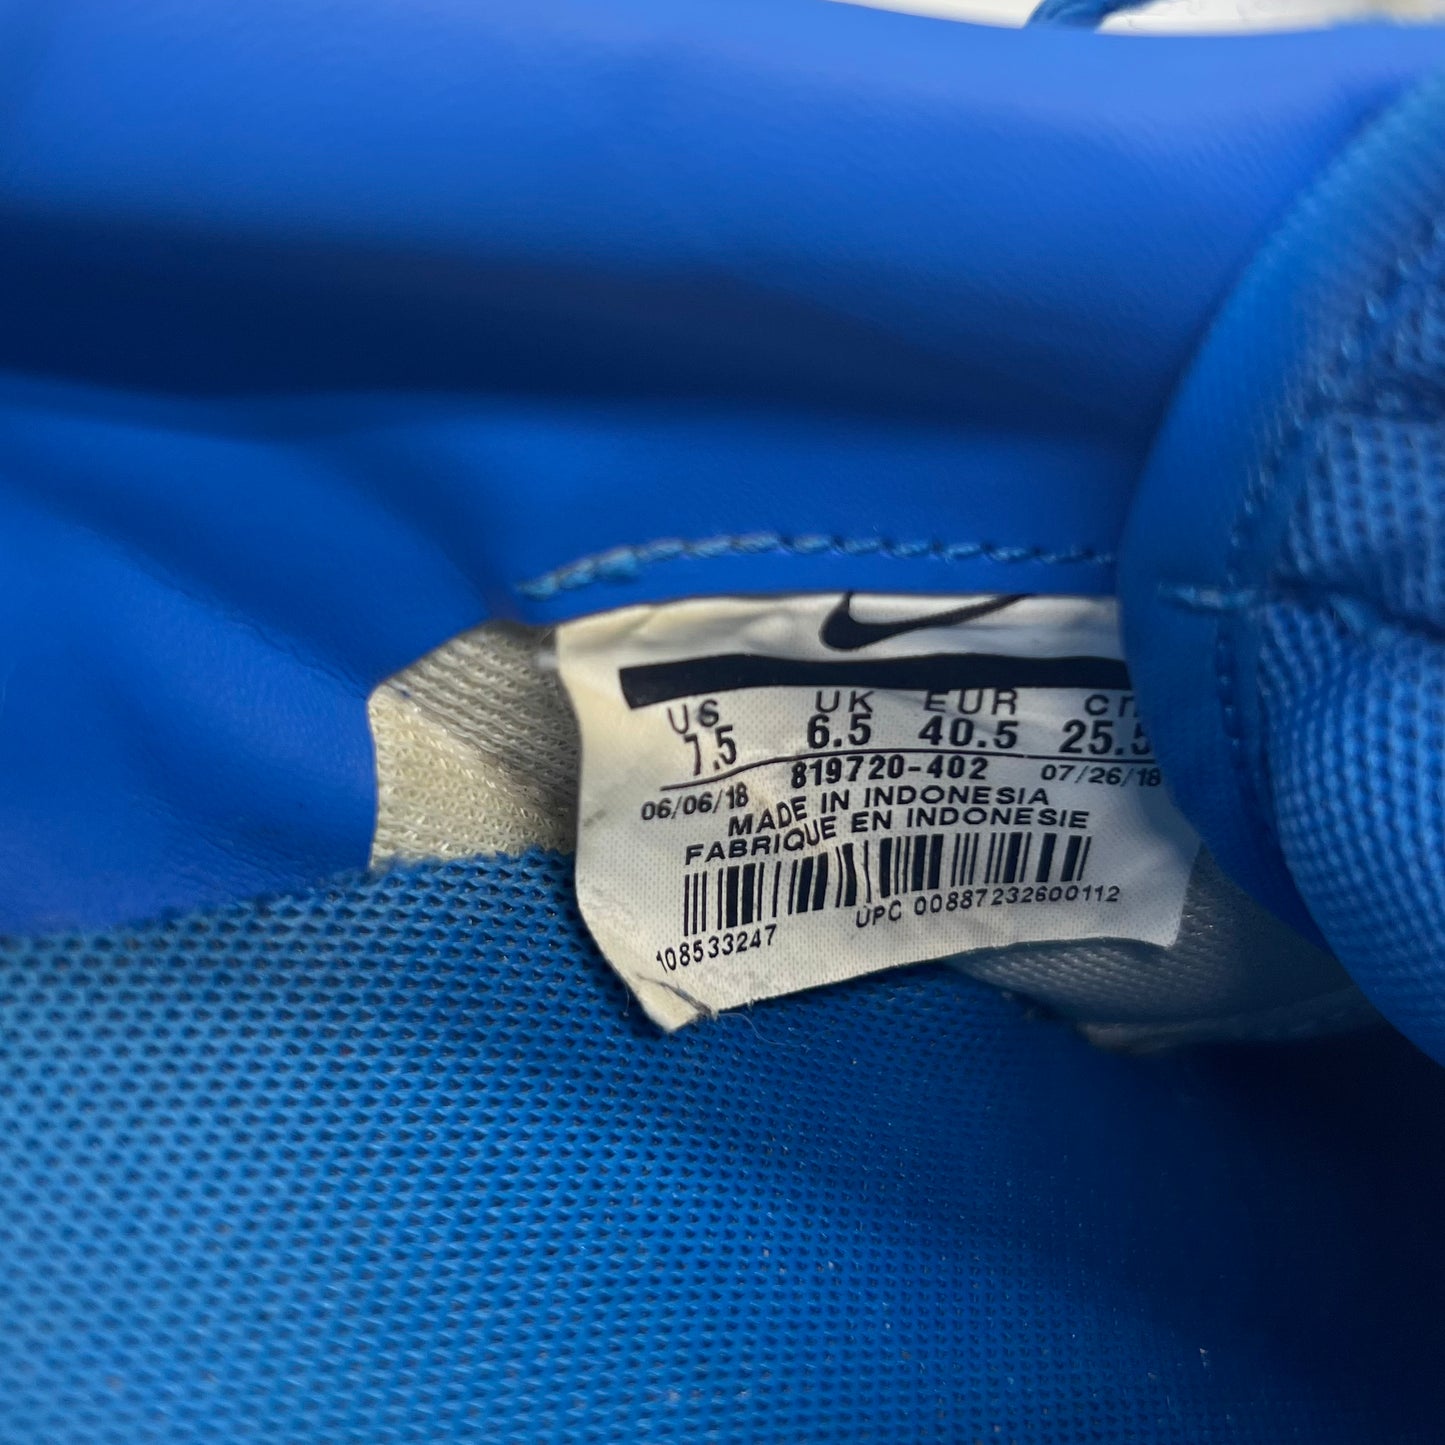 Nike Cortez Basic Nylon Signal Blue / White 819720-402 Mens 7.5